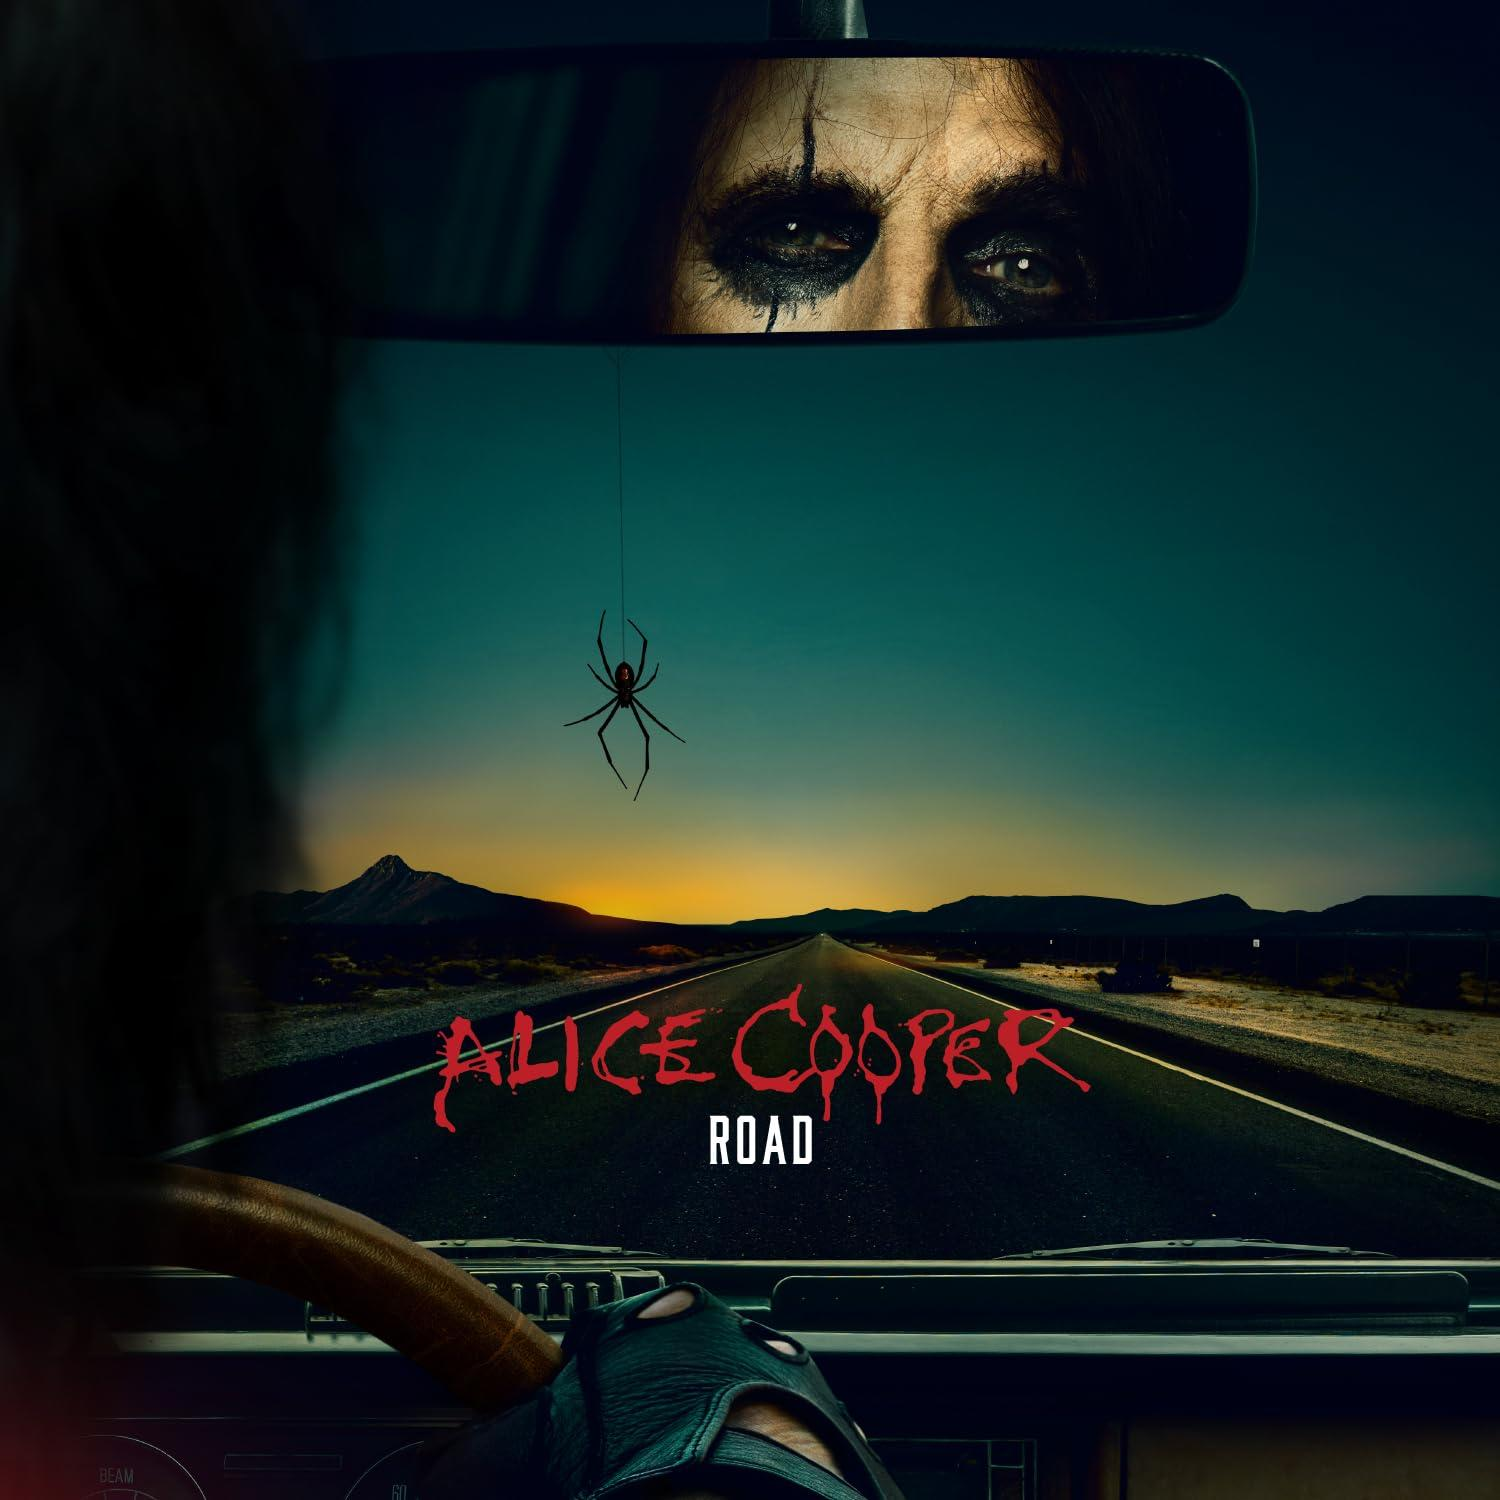 Alice Cooper - ROAD (CD Video) - DVD 